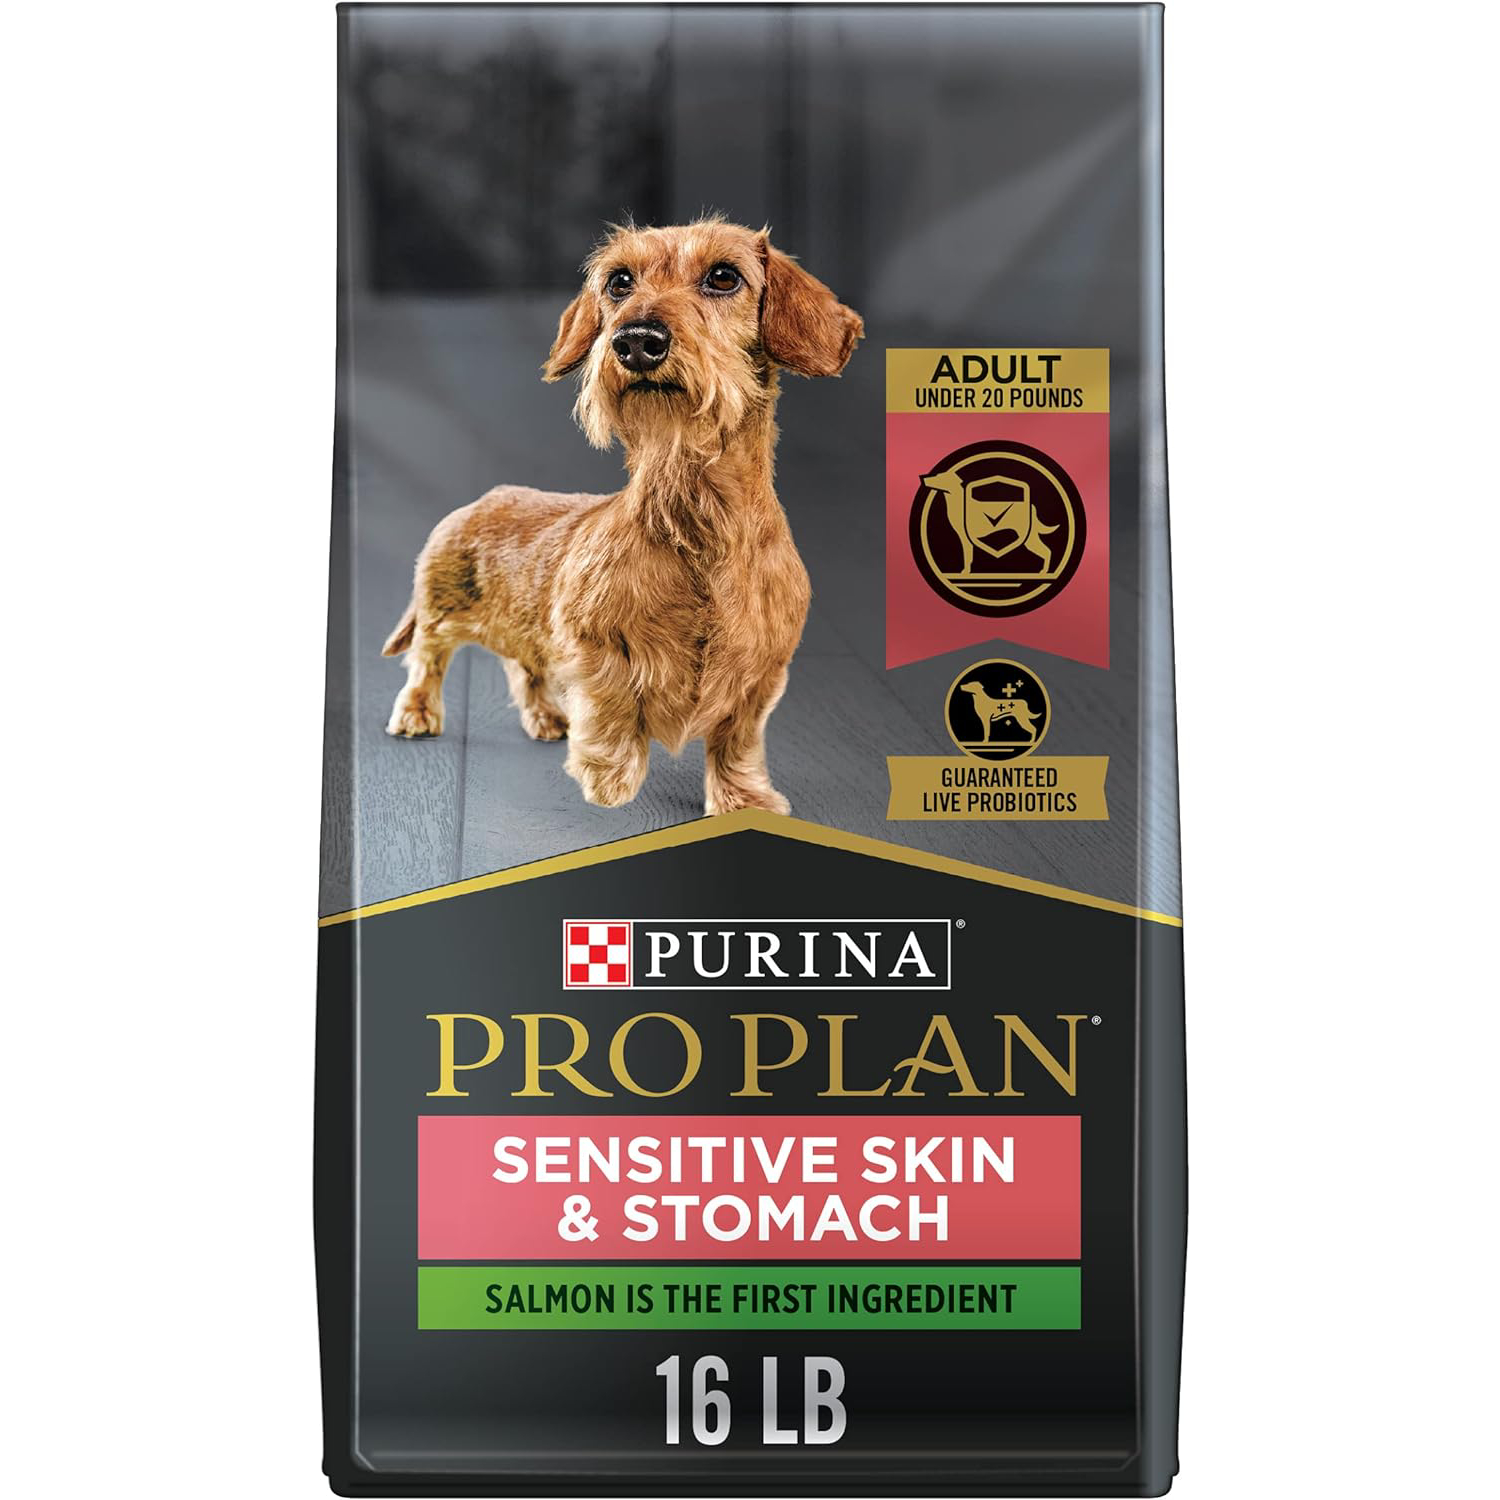 Purina Pro Plan Sensitive Skin and Stomach Adult Dog Food 